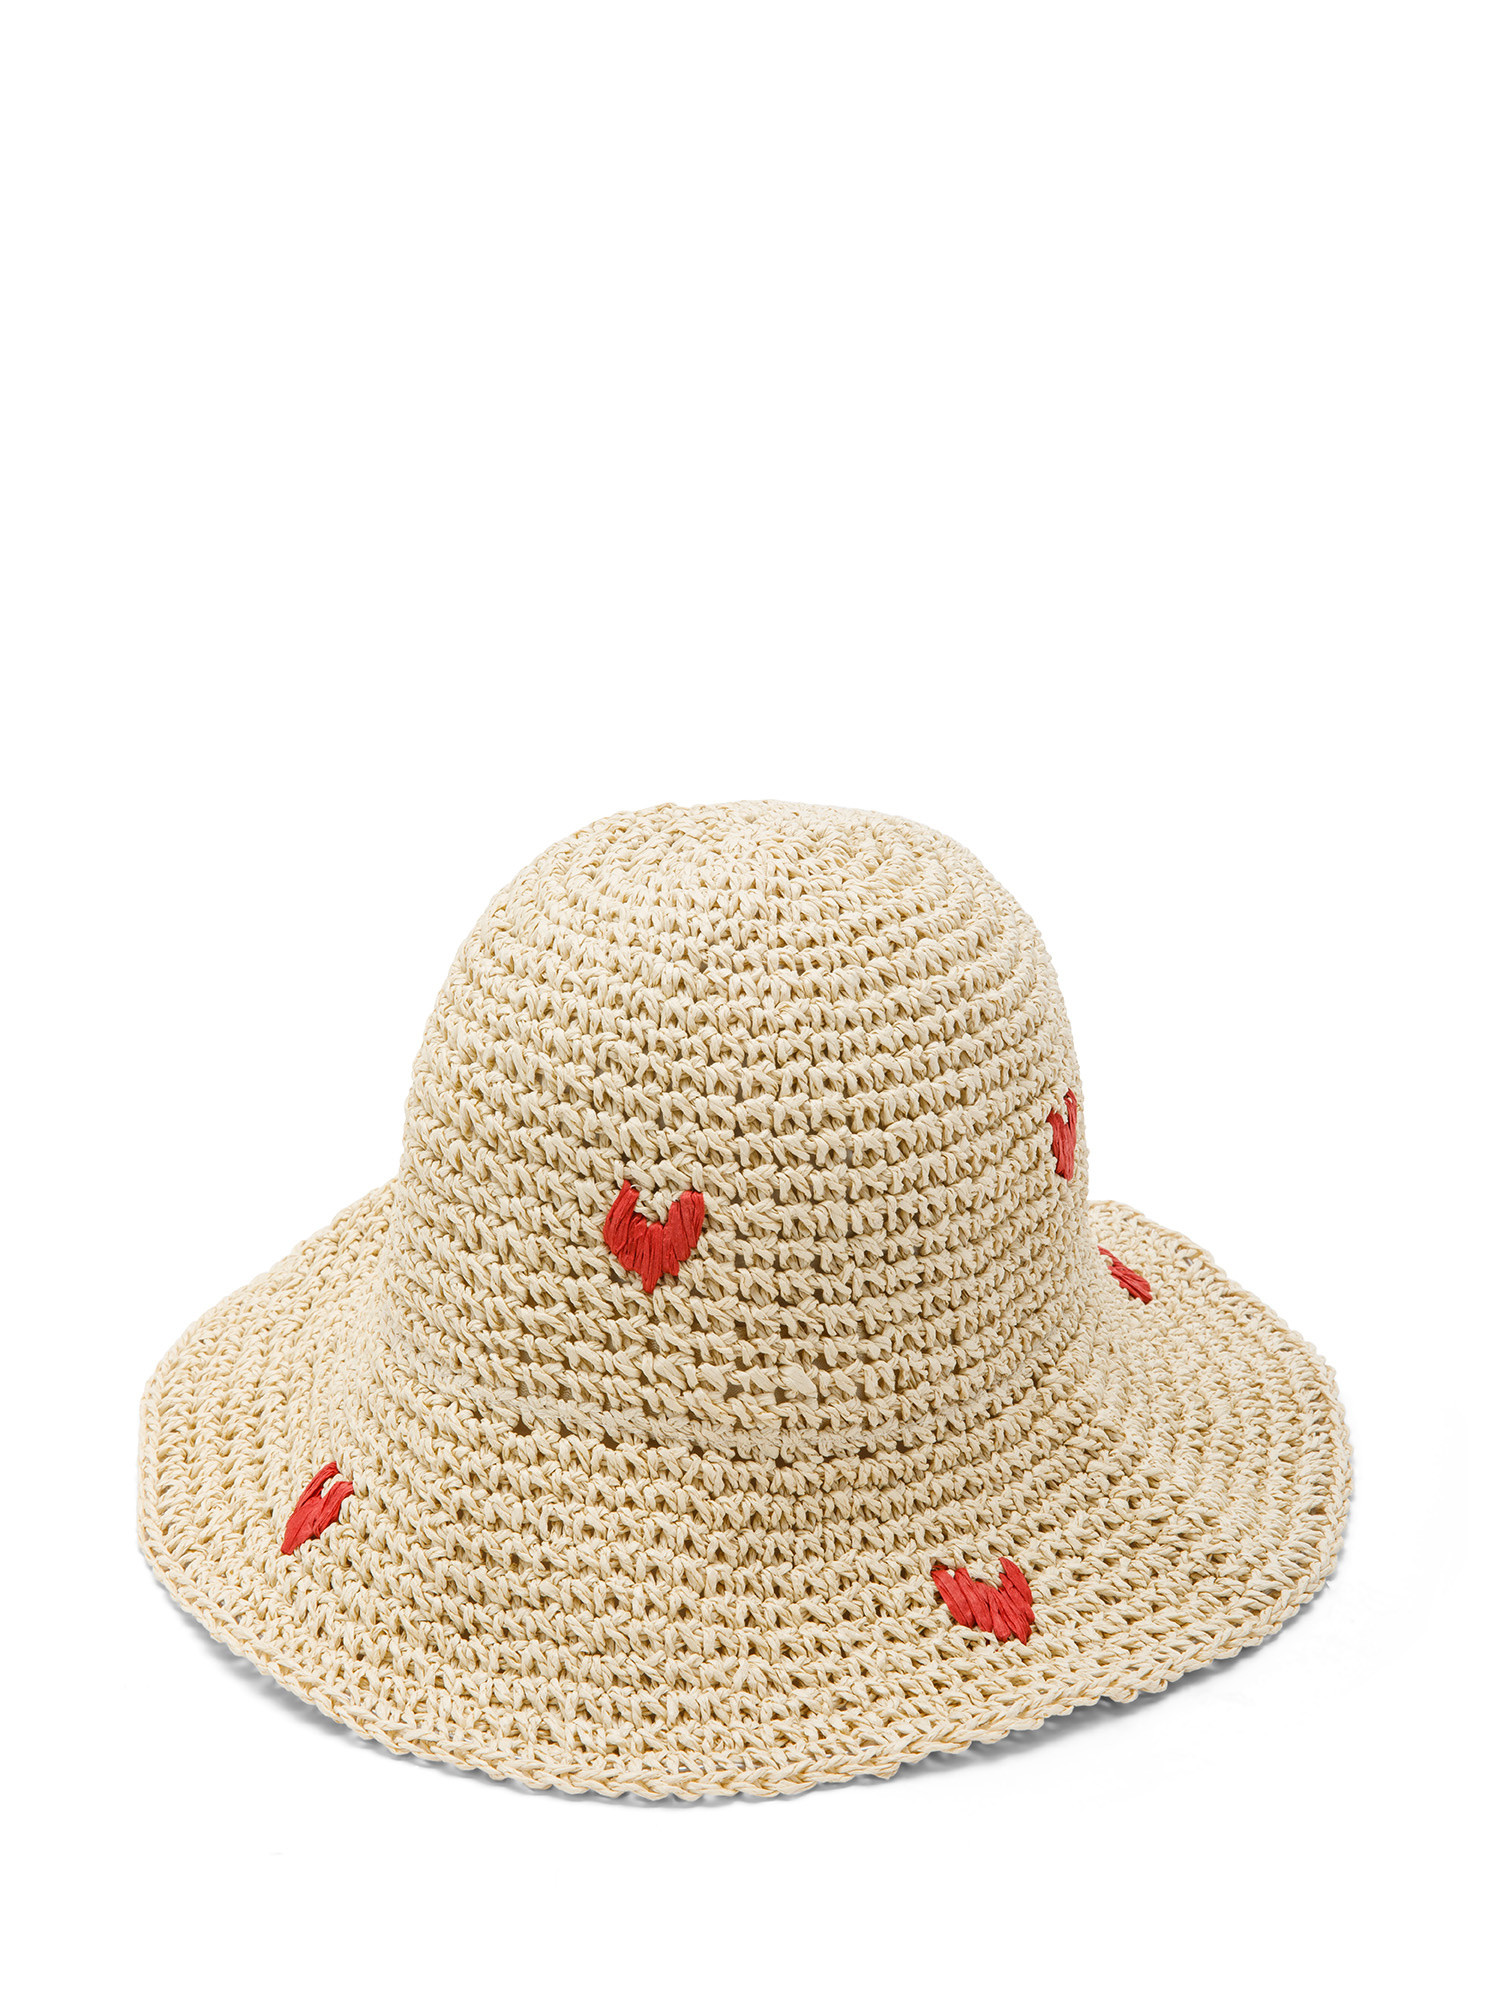 Koan - Cappello con ricamo, Naturale, large image number 0